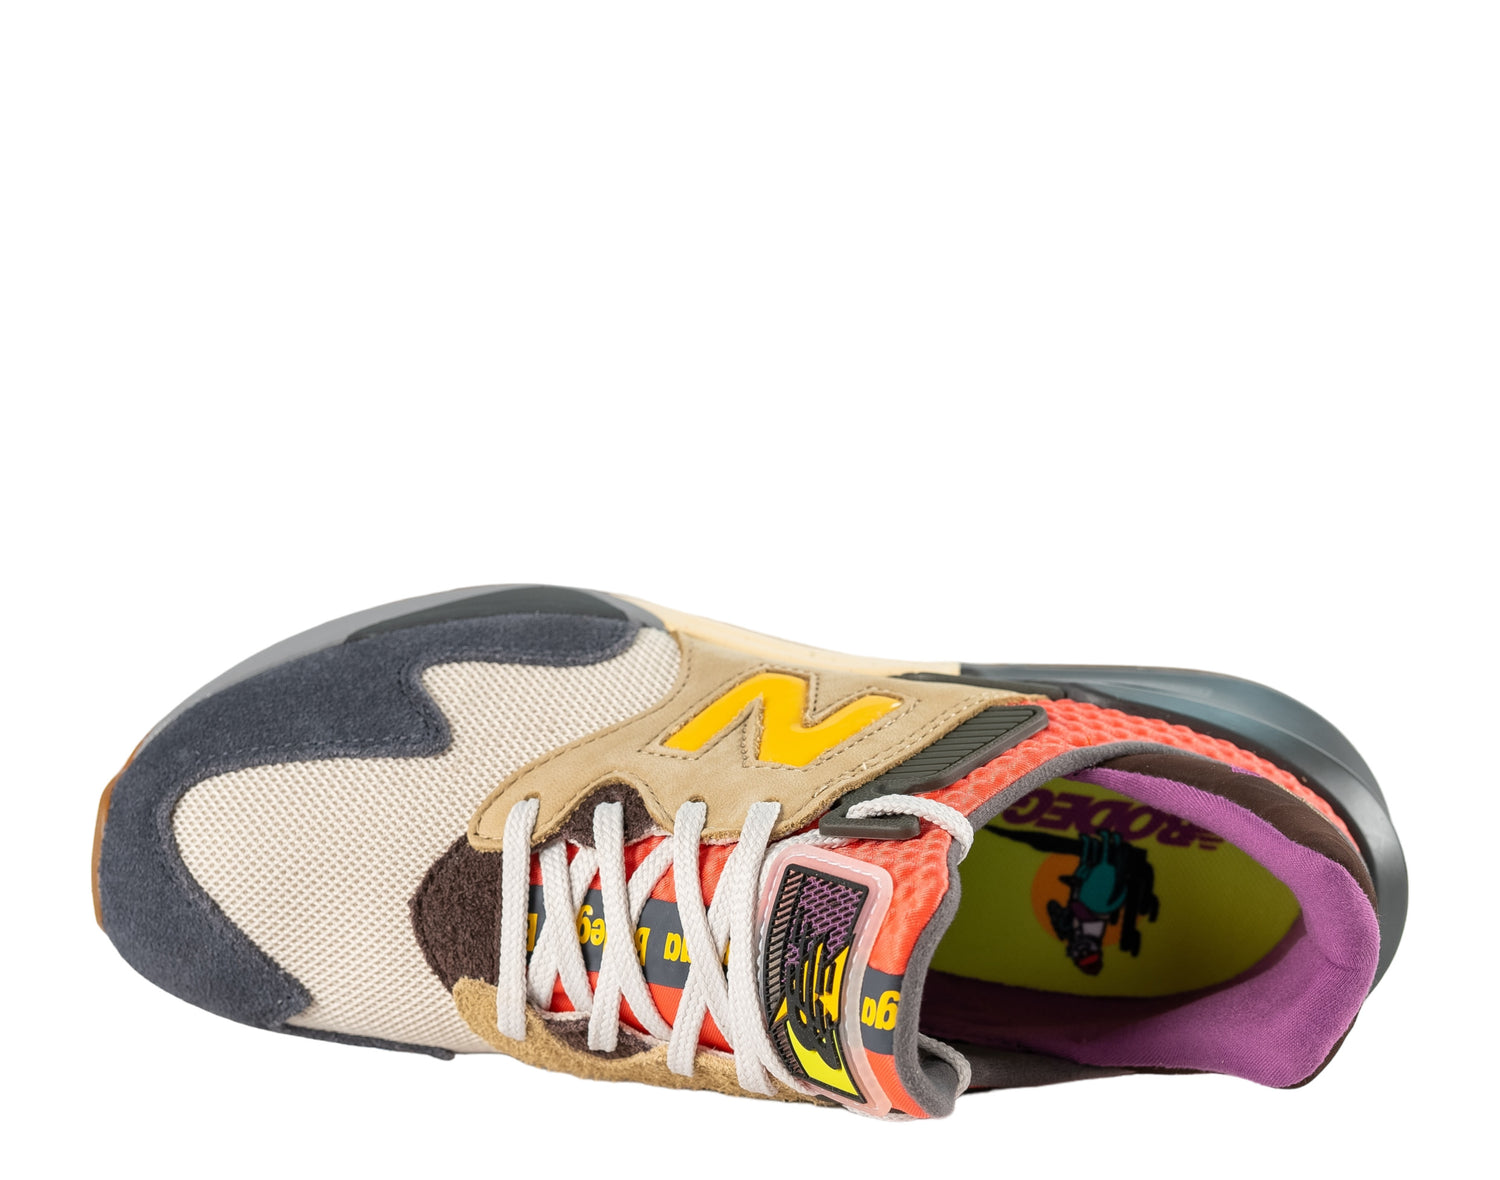 New Balance x Bodega MS997 Men's Running Shoes